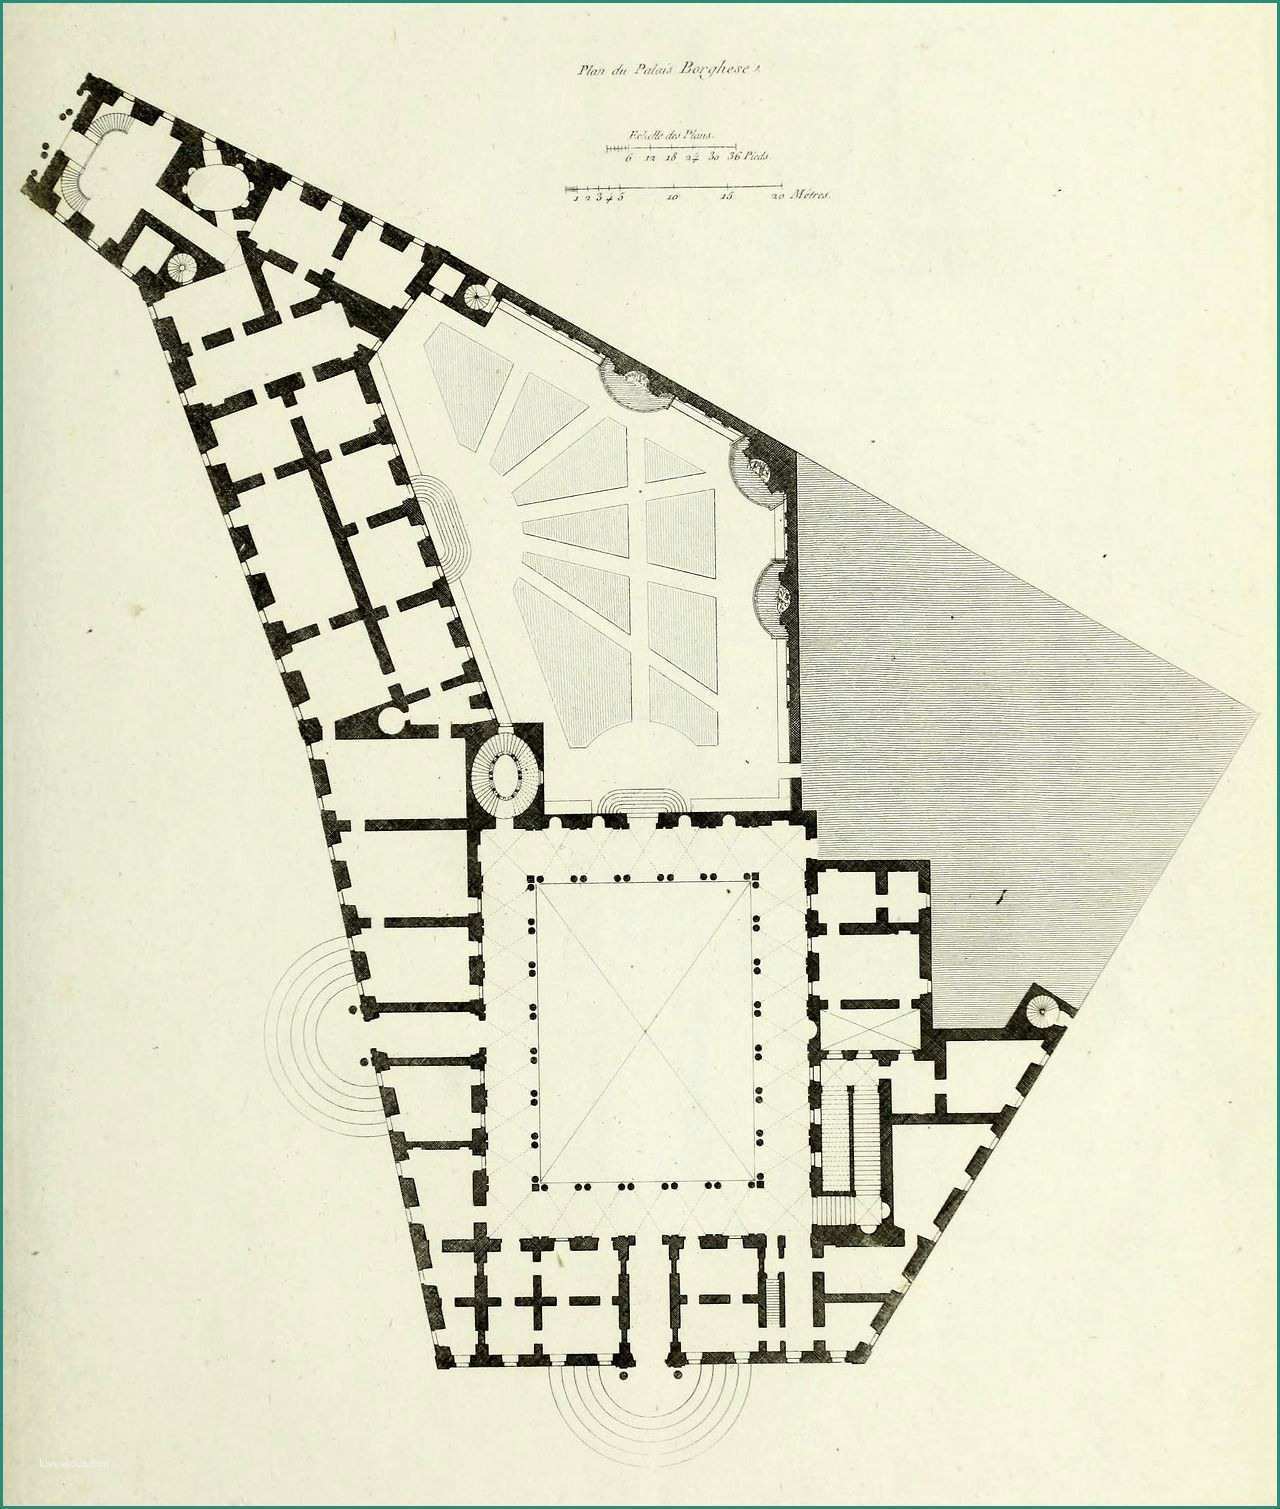 Porte Rei Dwg E Floor Plan Of the Palazzo Borghese Rome